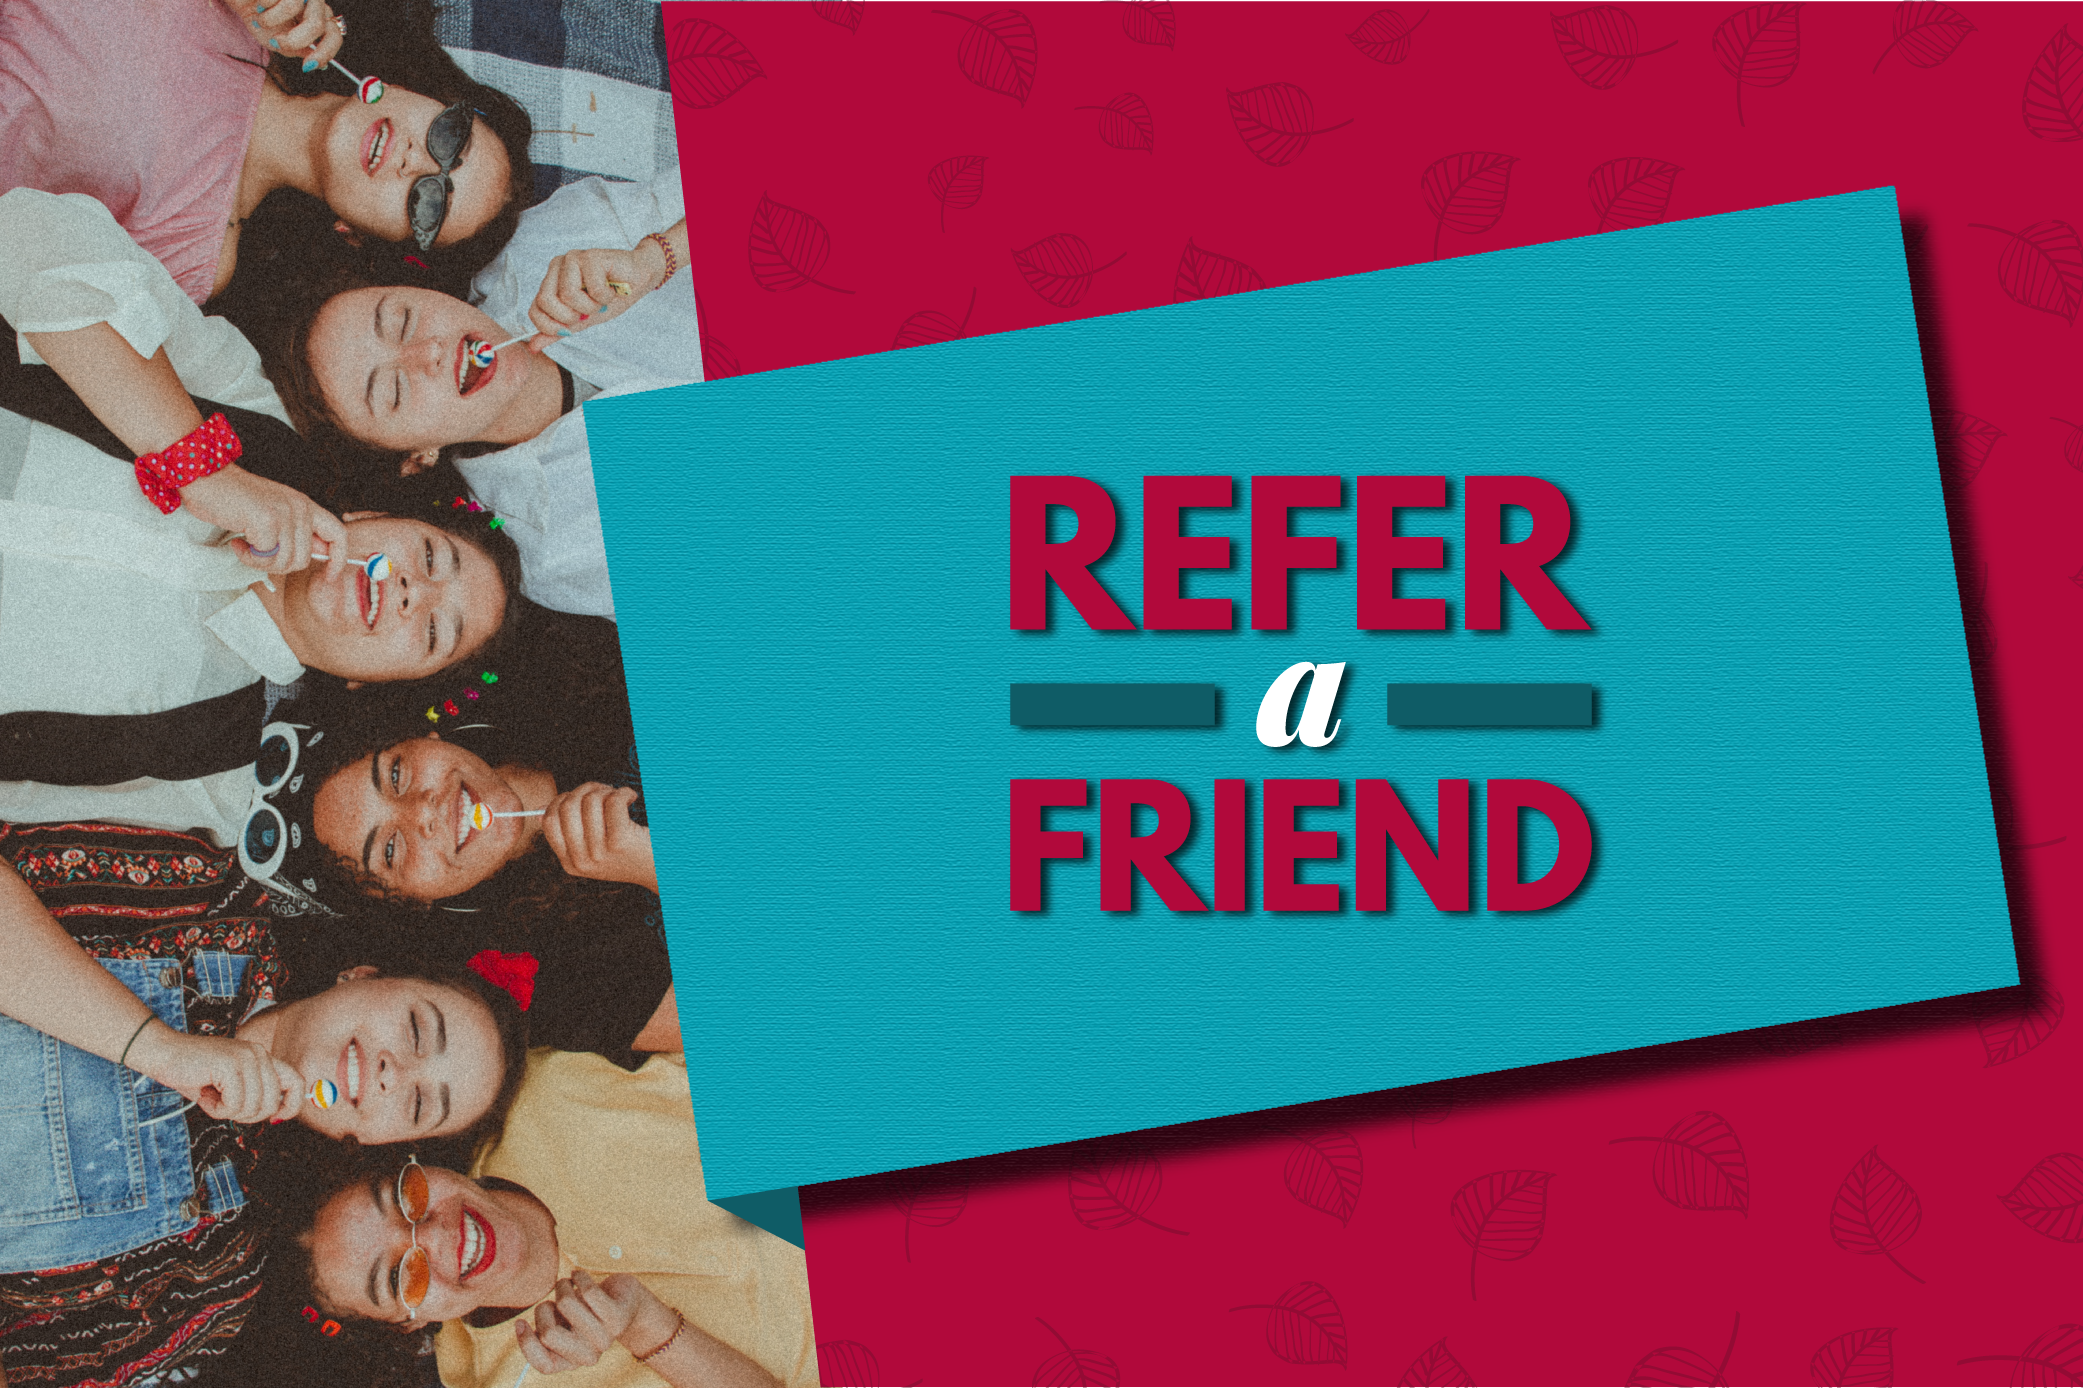 Refer a friend